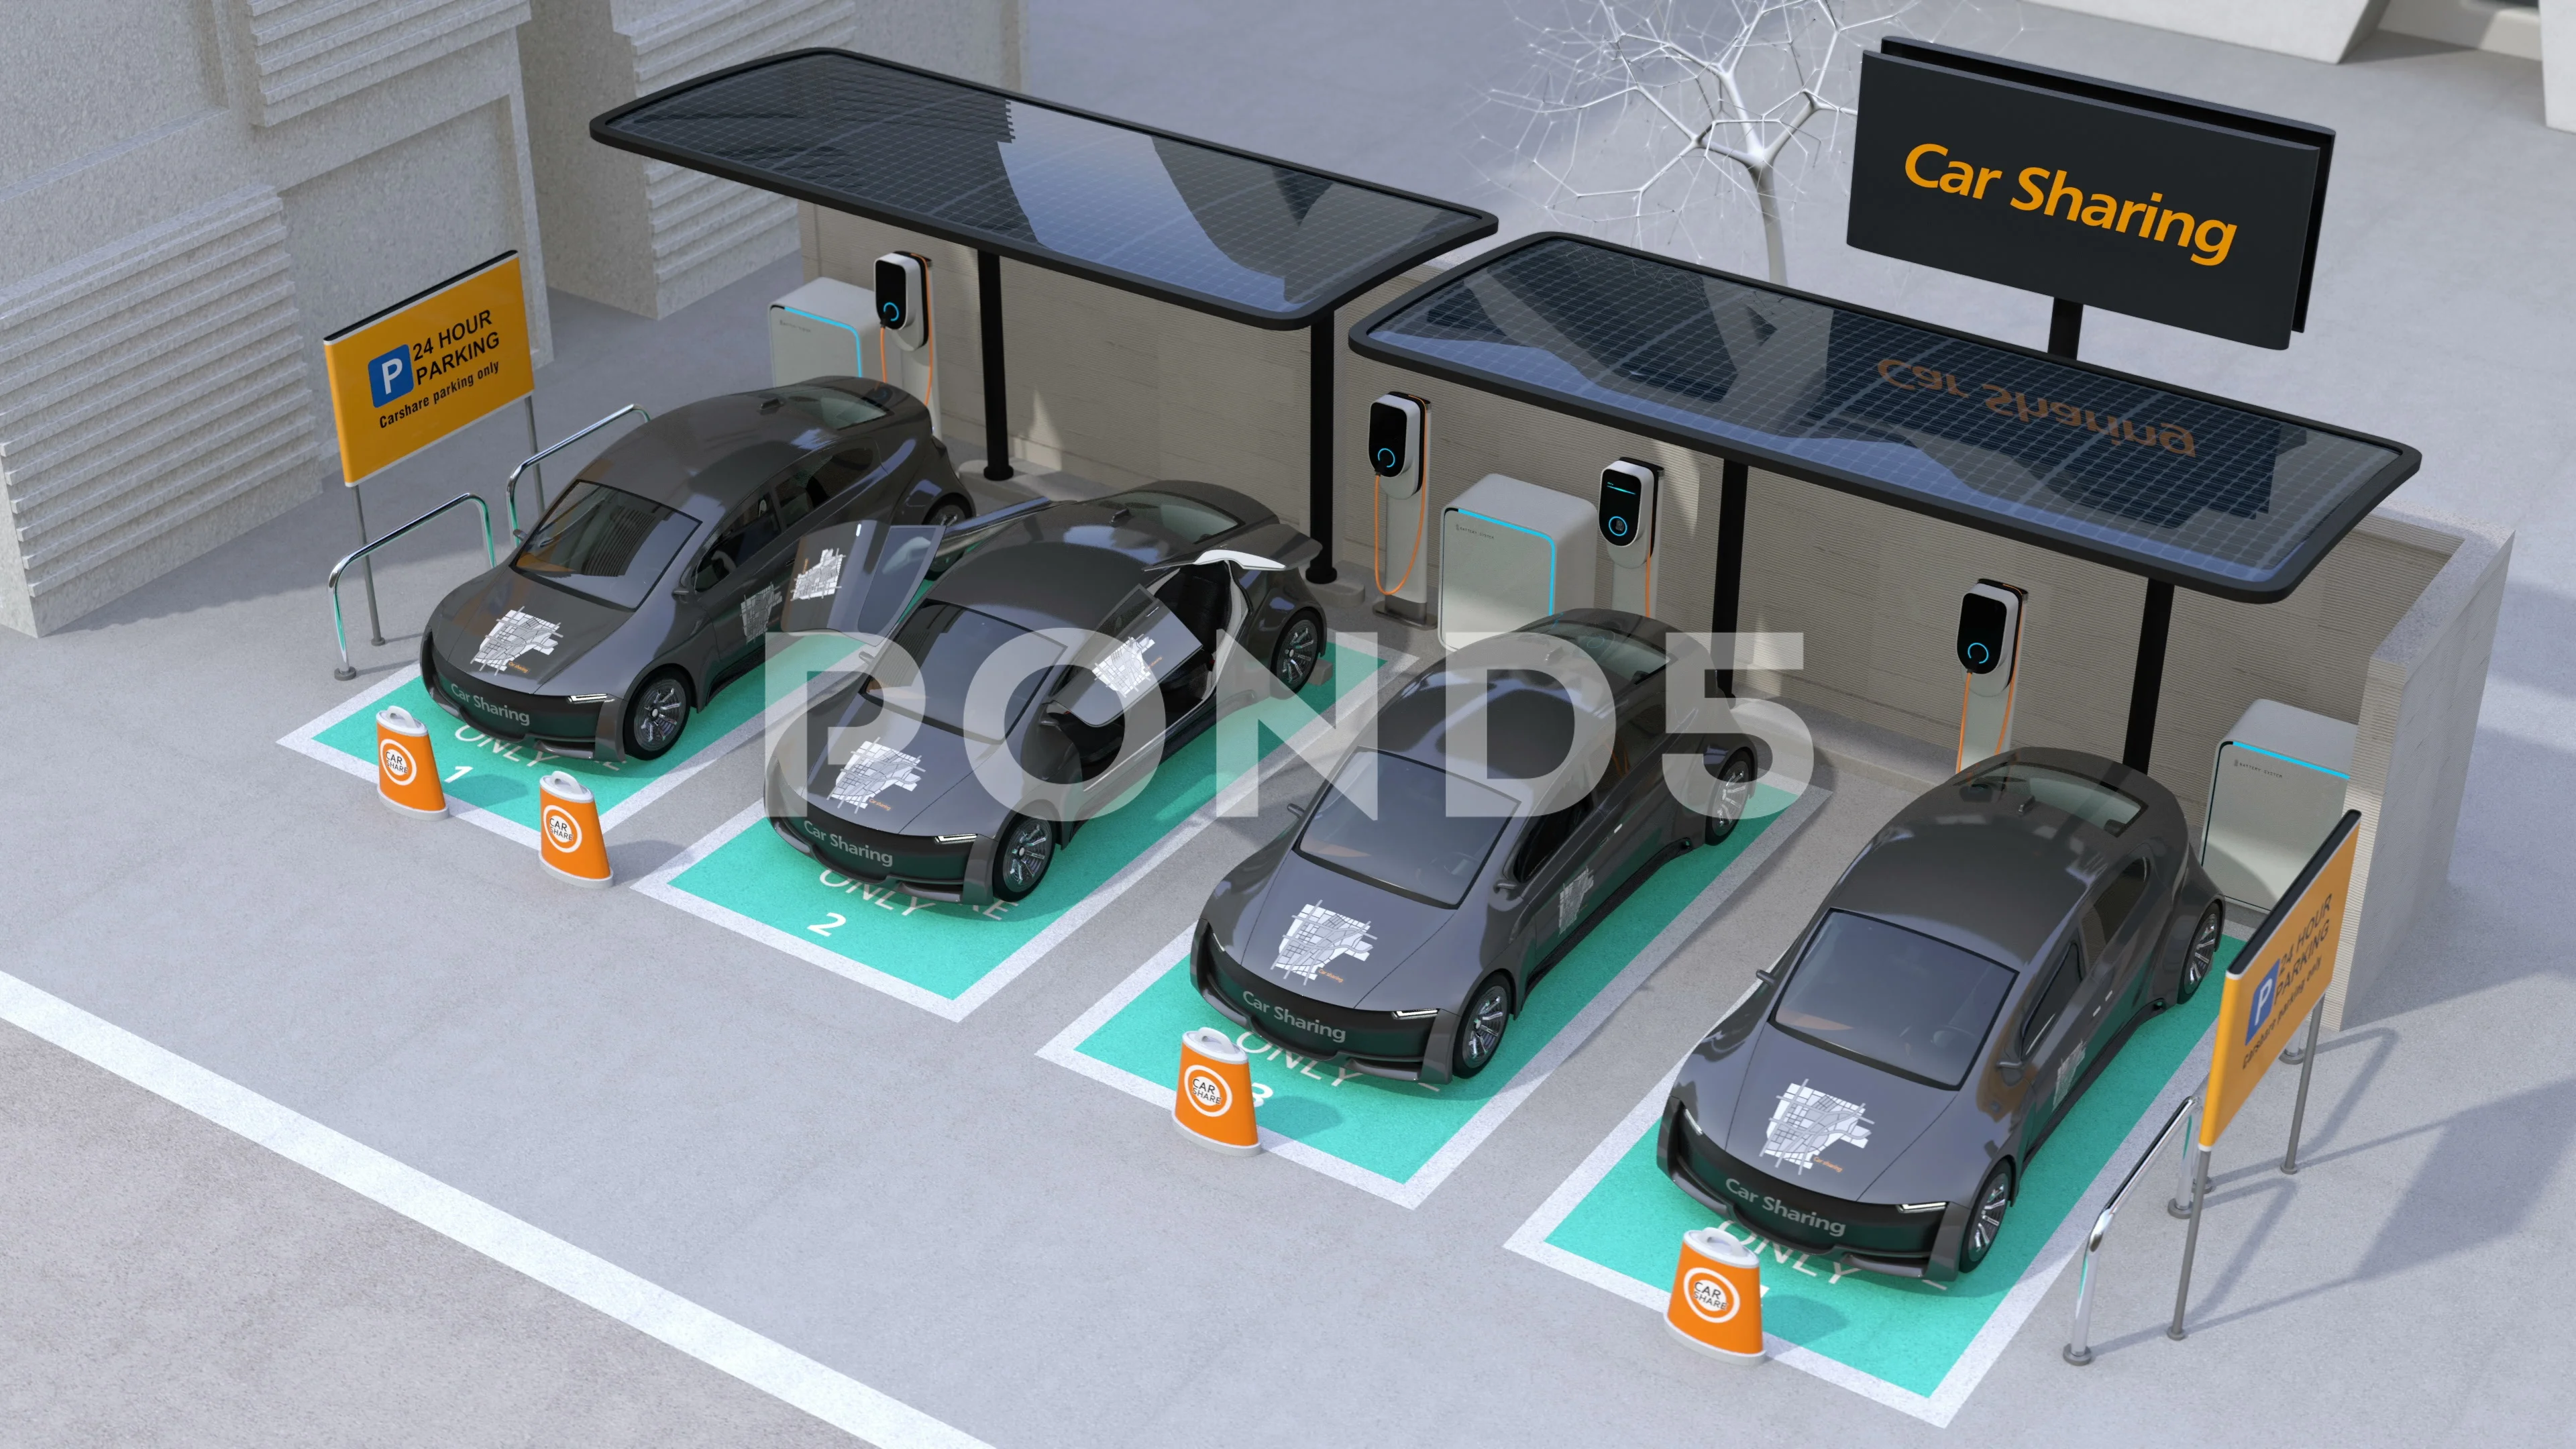 Electric car leaving car sharing parking pic